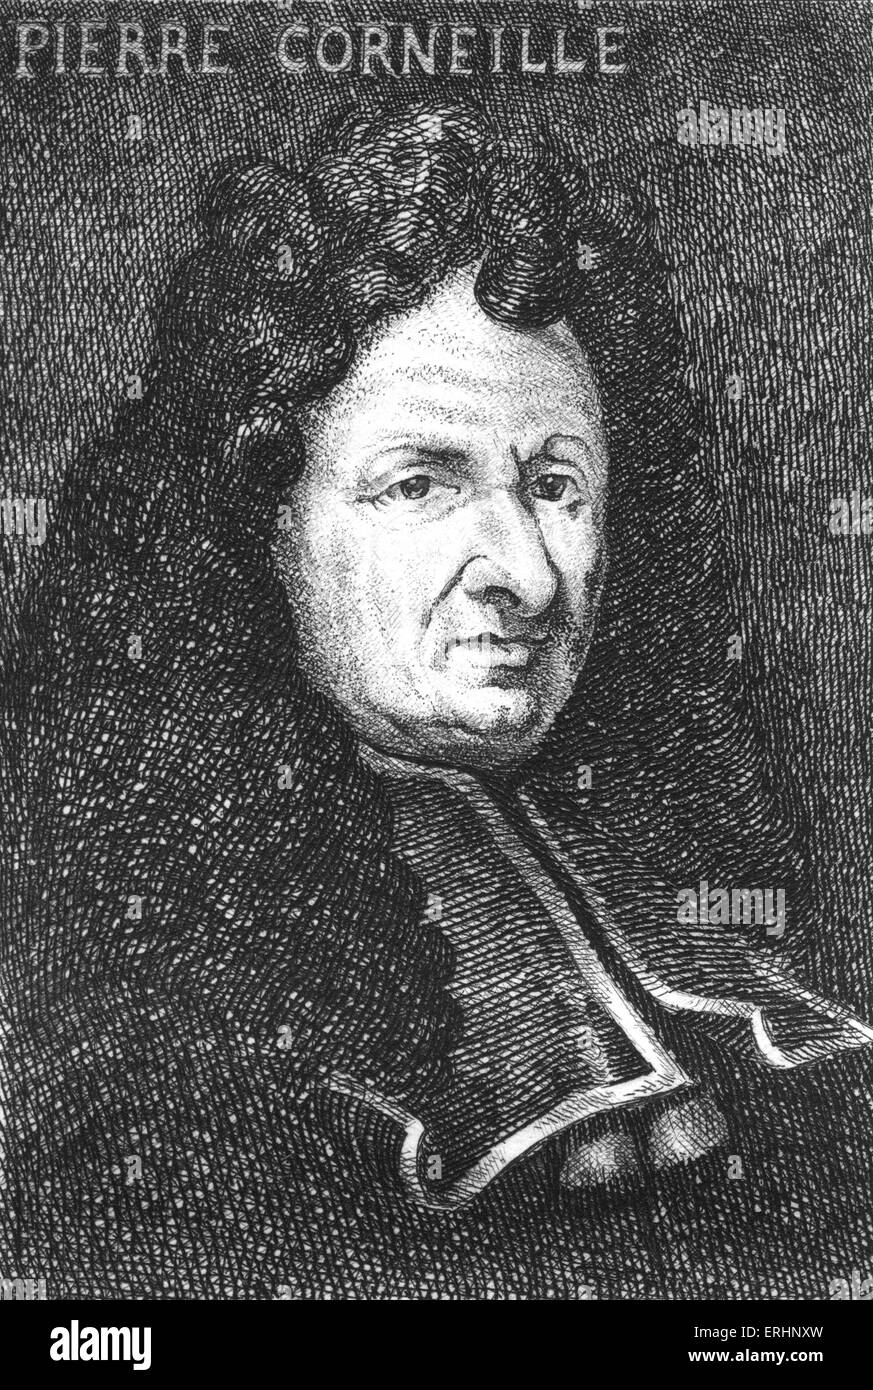 Pierre Corneille - French dramatist, 1606-1684. Stock Photo